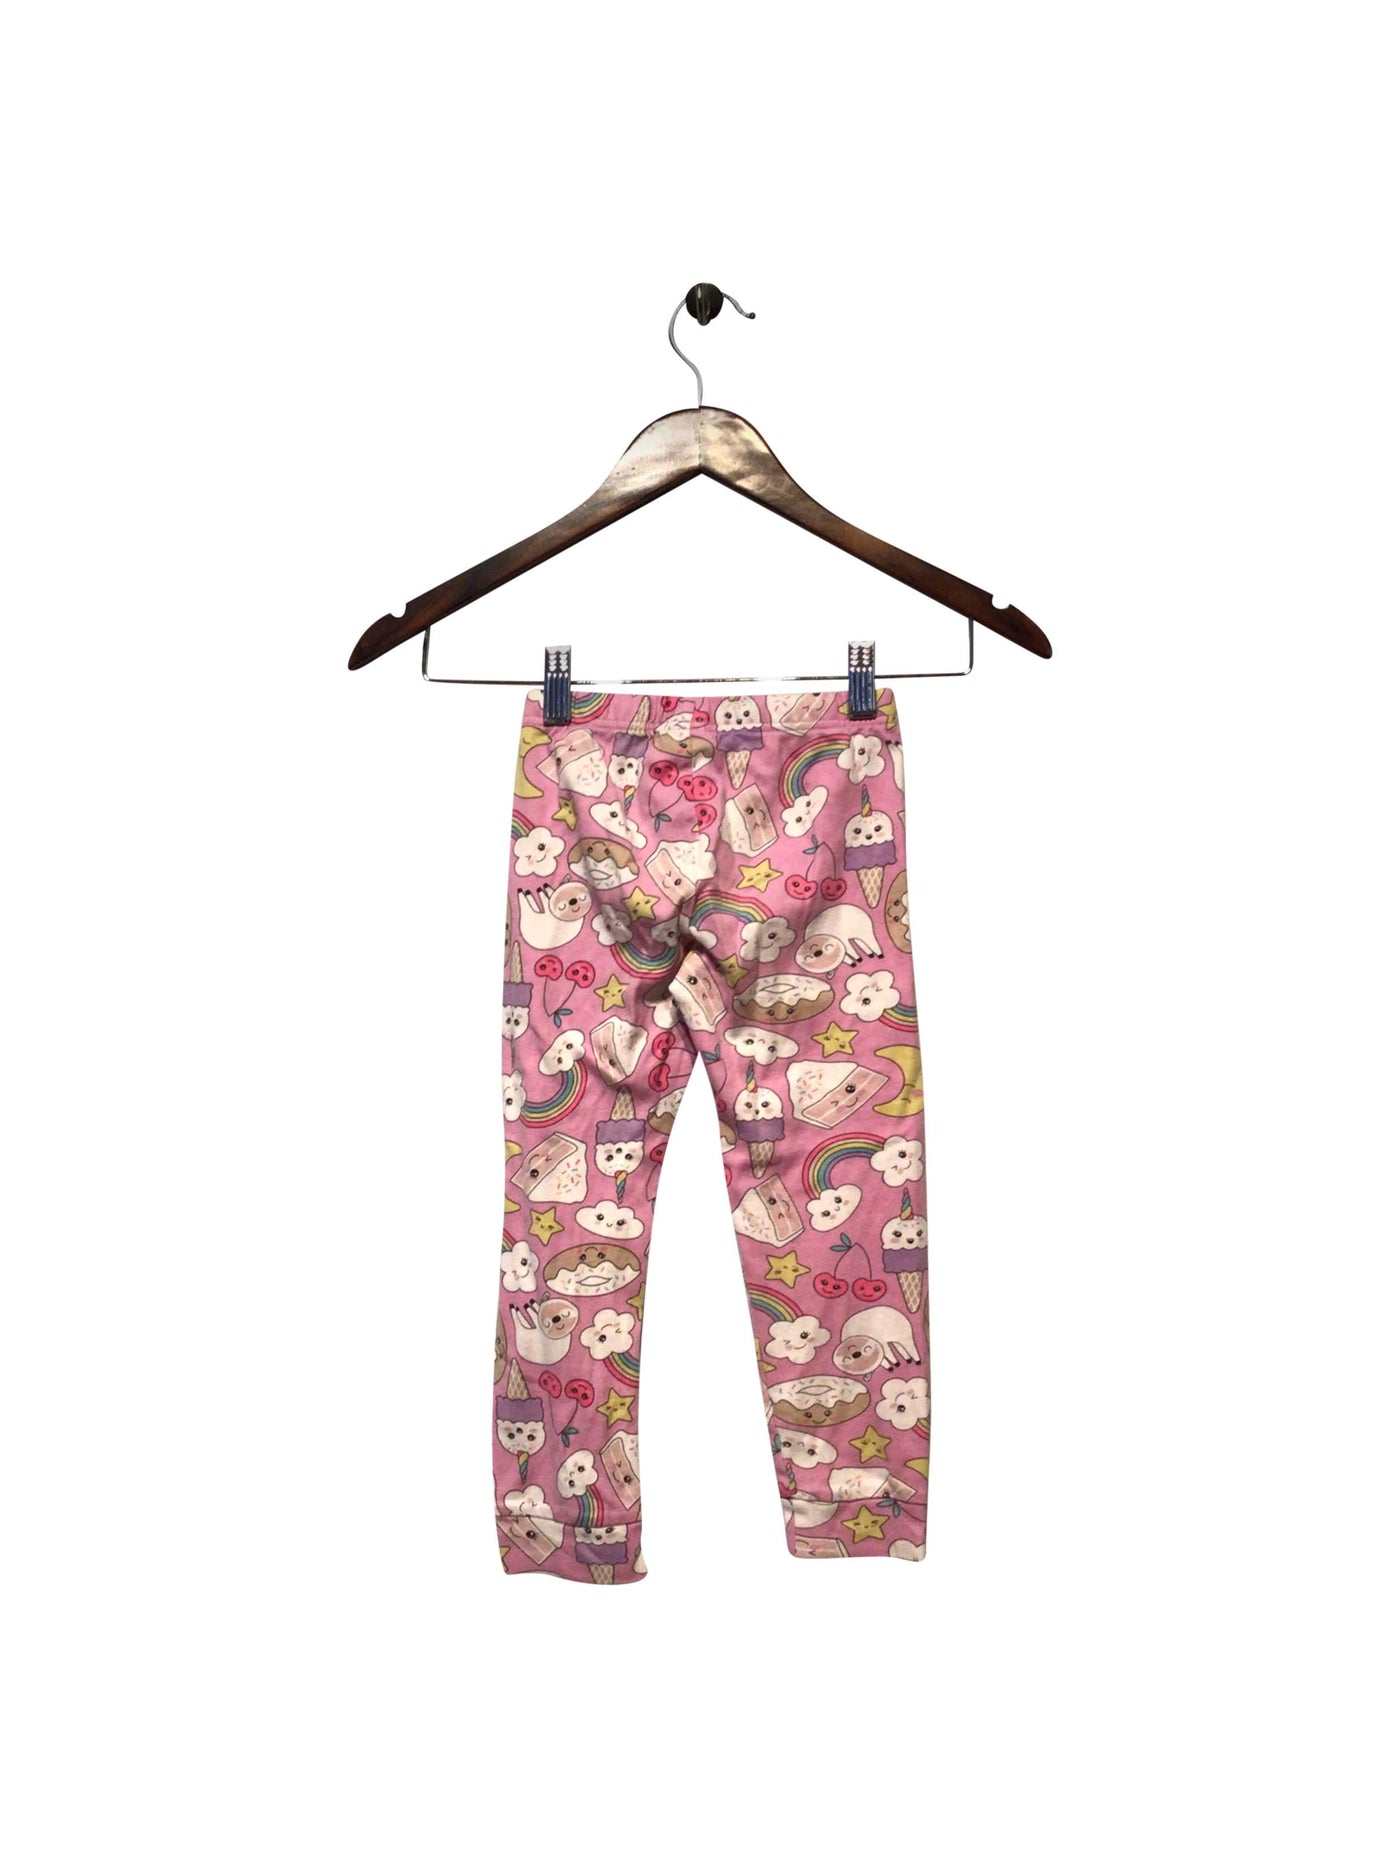 THE CHILDREN'S PLACE Regular fit Pajamas in Pink  -  5  14.19 Koop